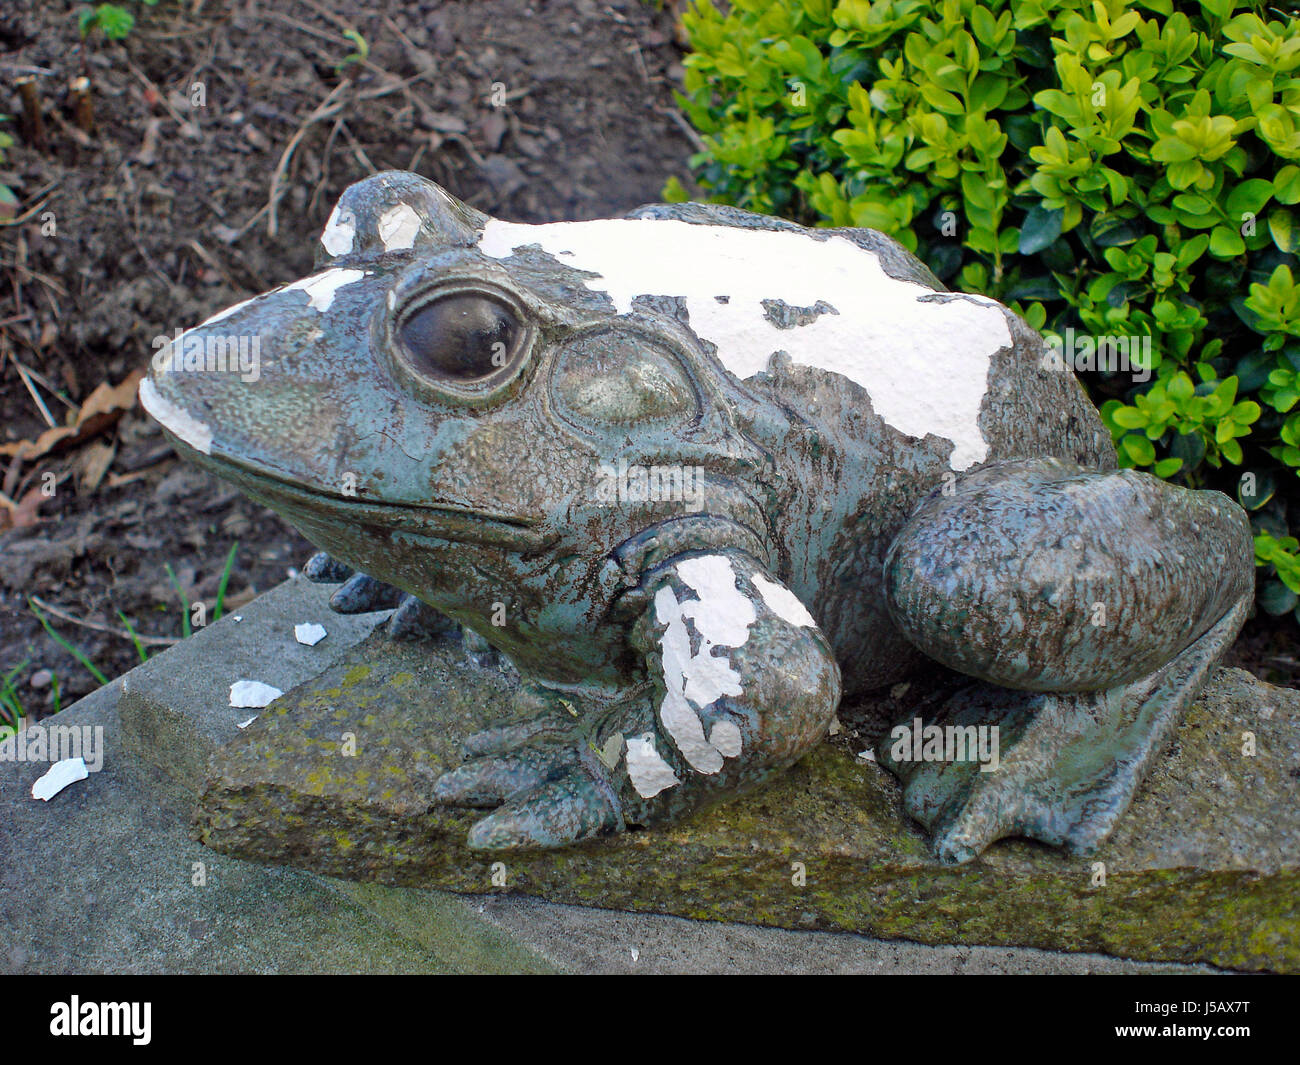 https://c8.alamy.com/compfr/j5ax7t/pierre-jardin-bouche-sculpture-jardins-grenouille-california-neuwesteel-froschaugen-j5ax7t.jpg